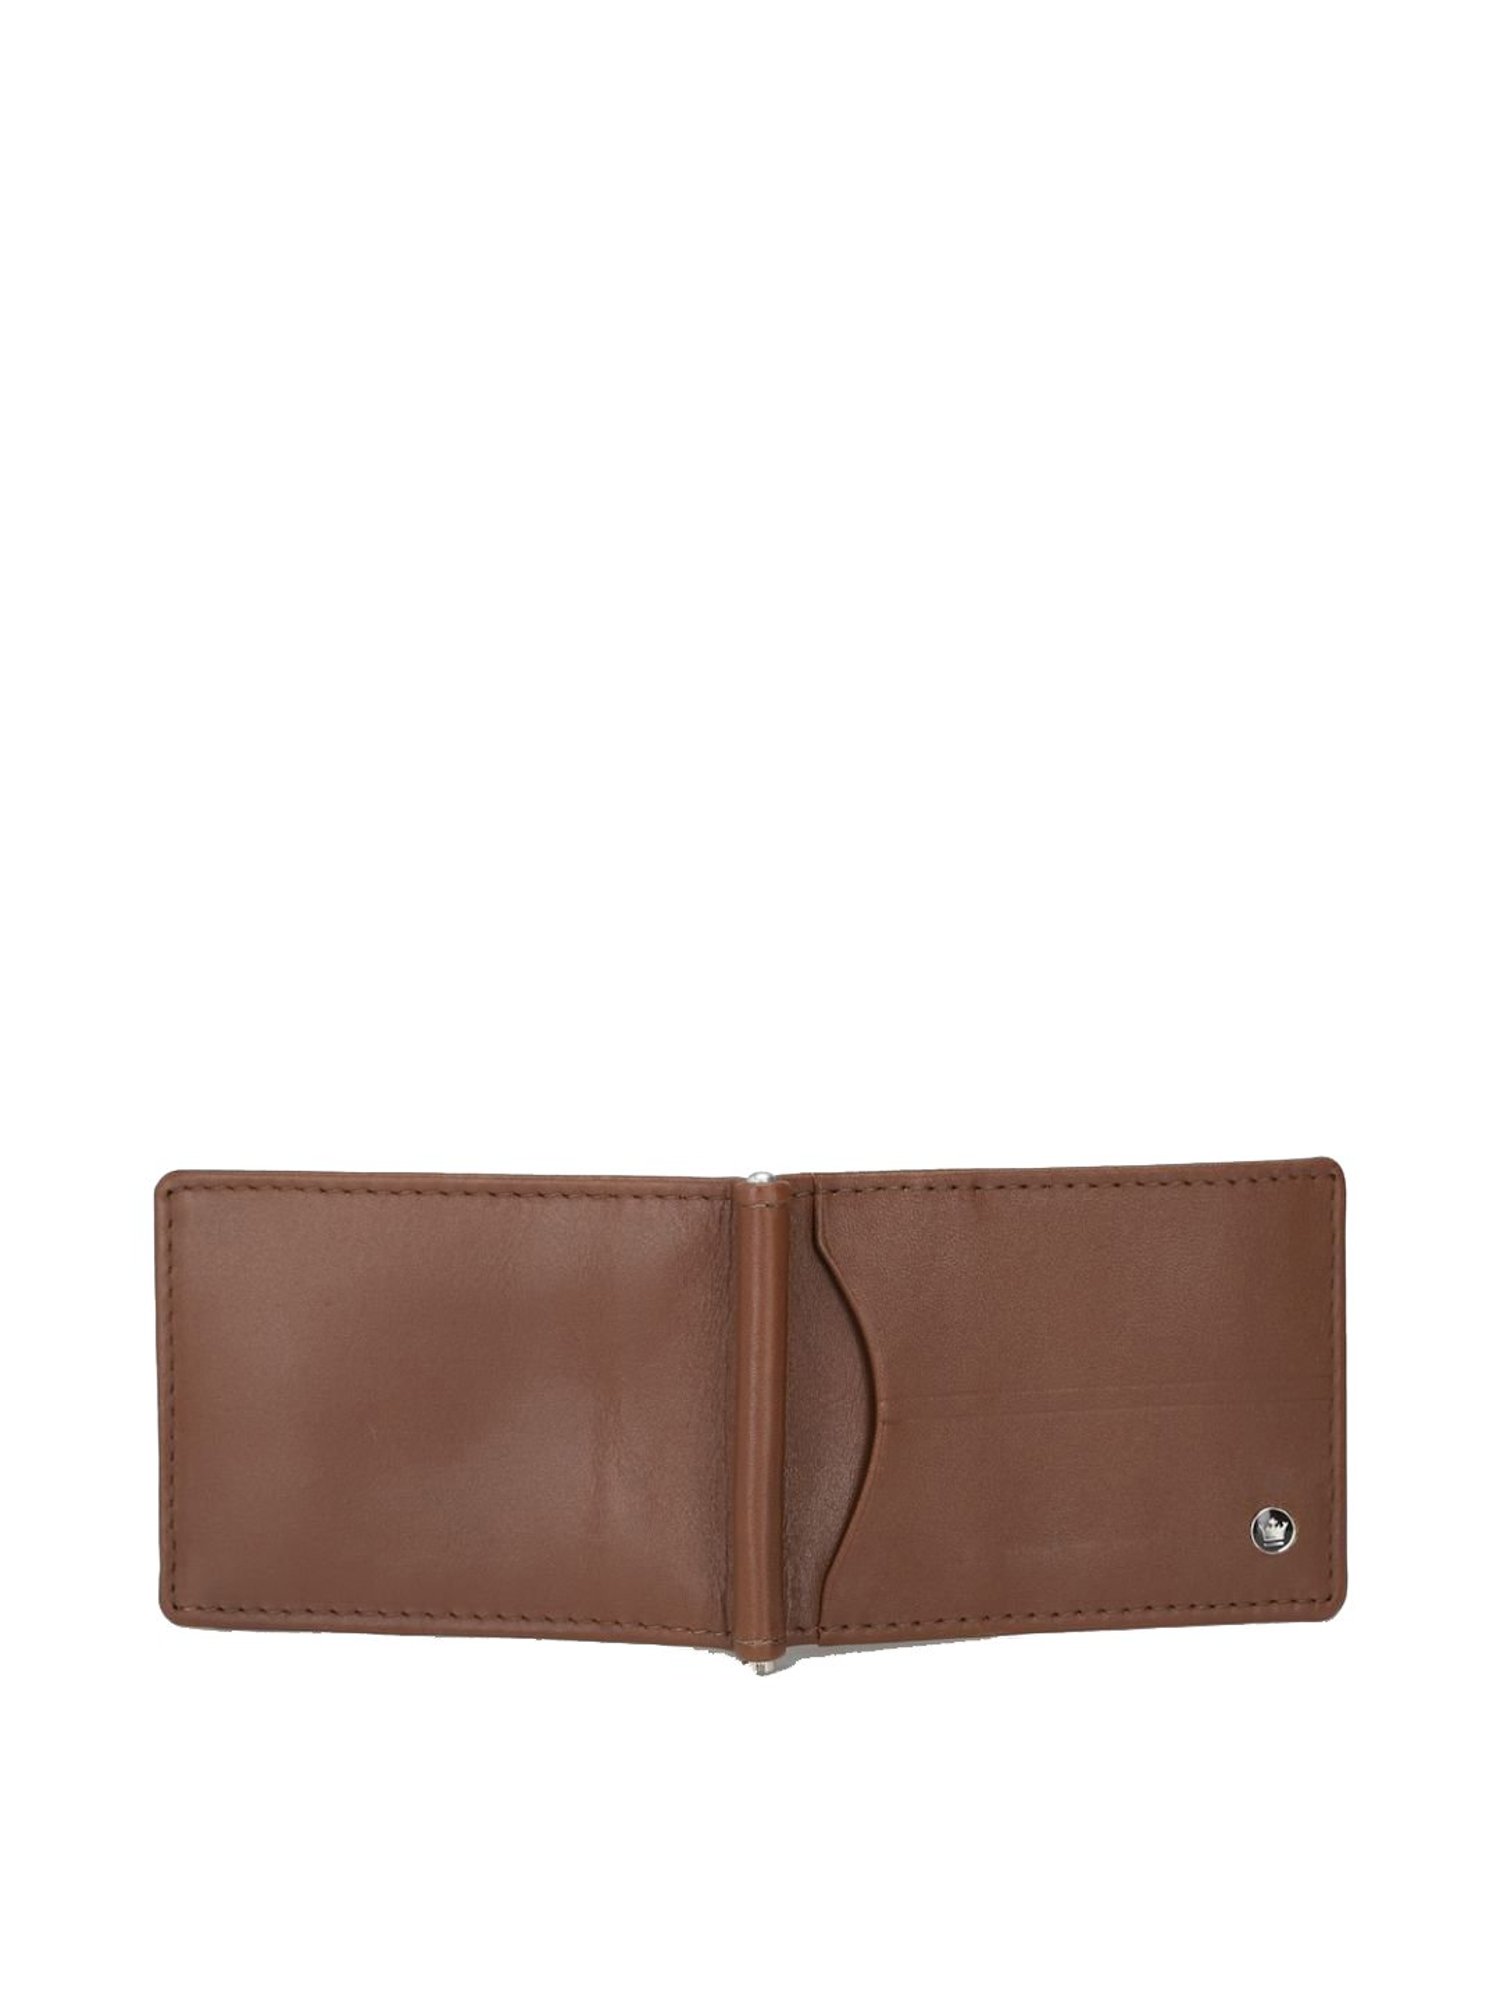 lp Lovis Philippr Leather Wallet